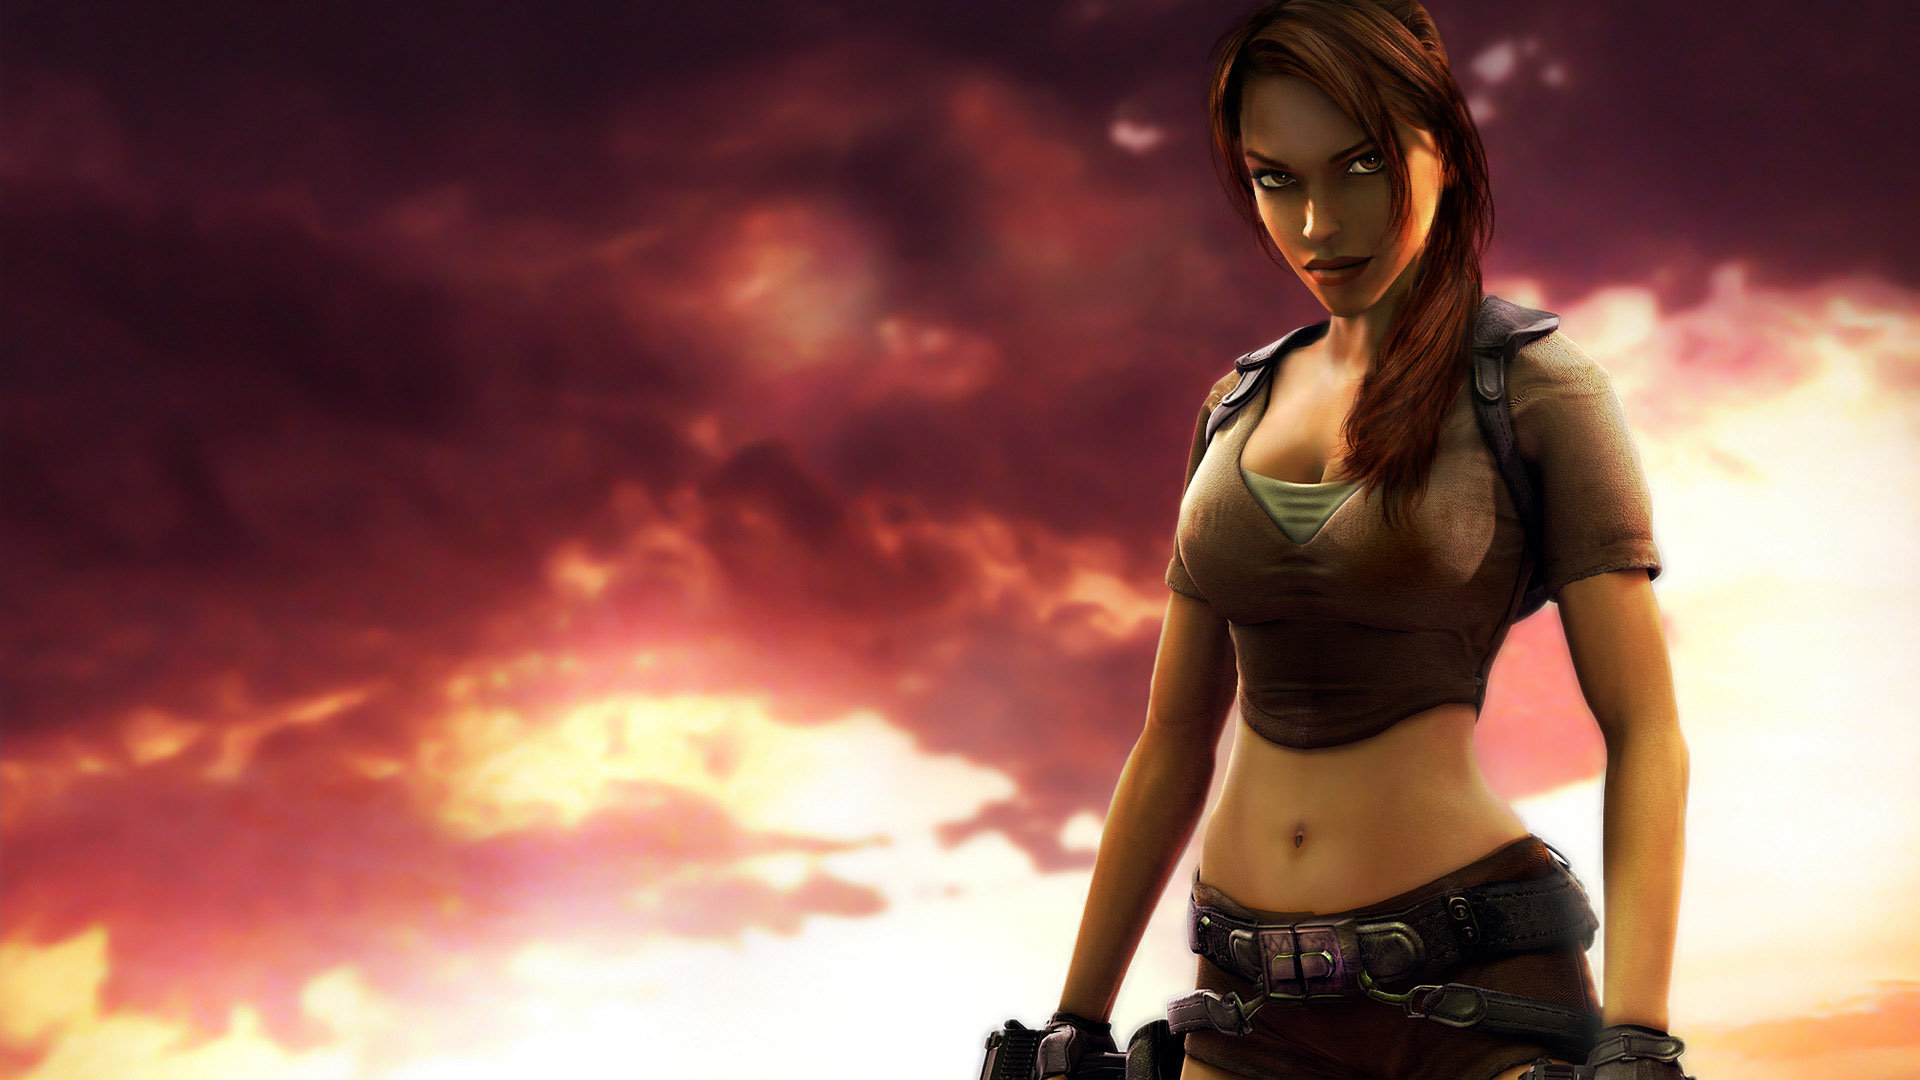 High resolution Tomb Raider (Lara Croft) hd 1080p wallpaper ID:437219 for PC